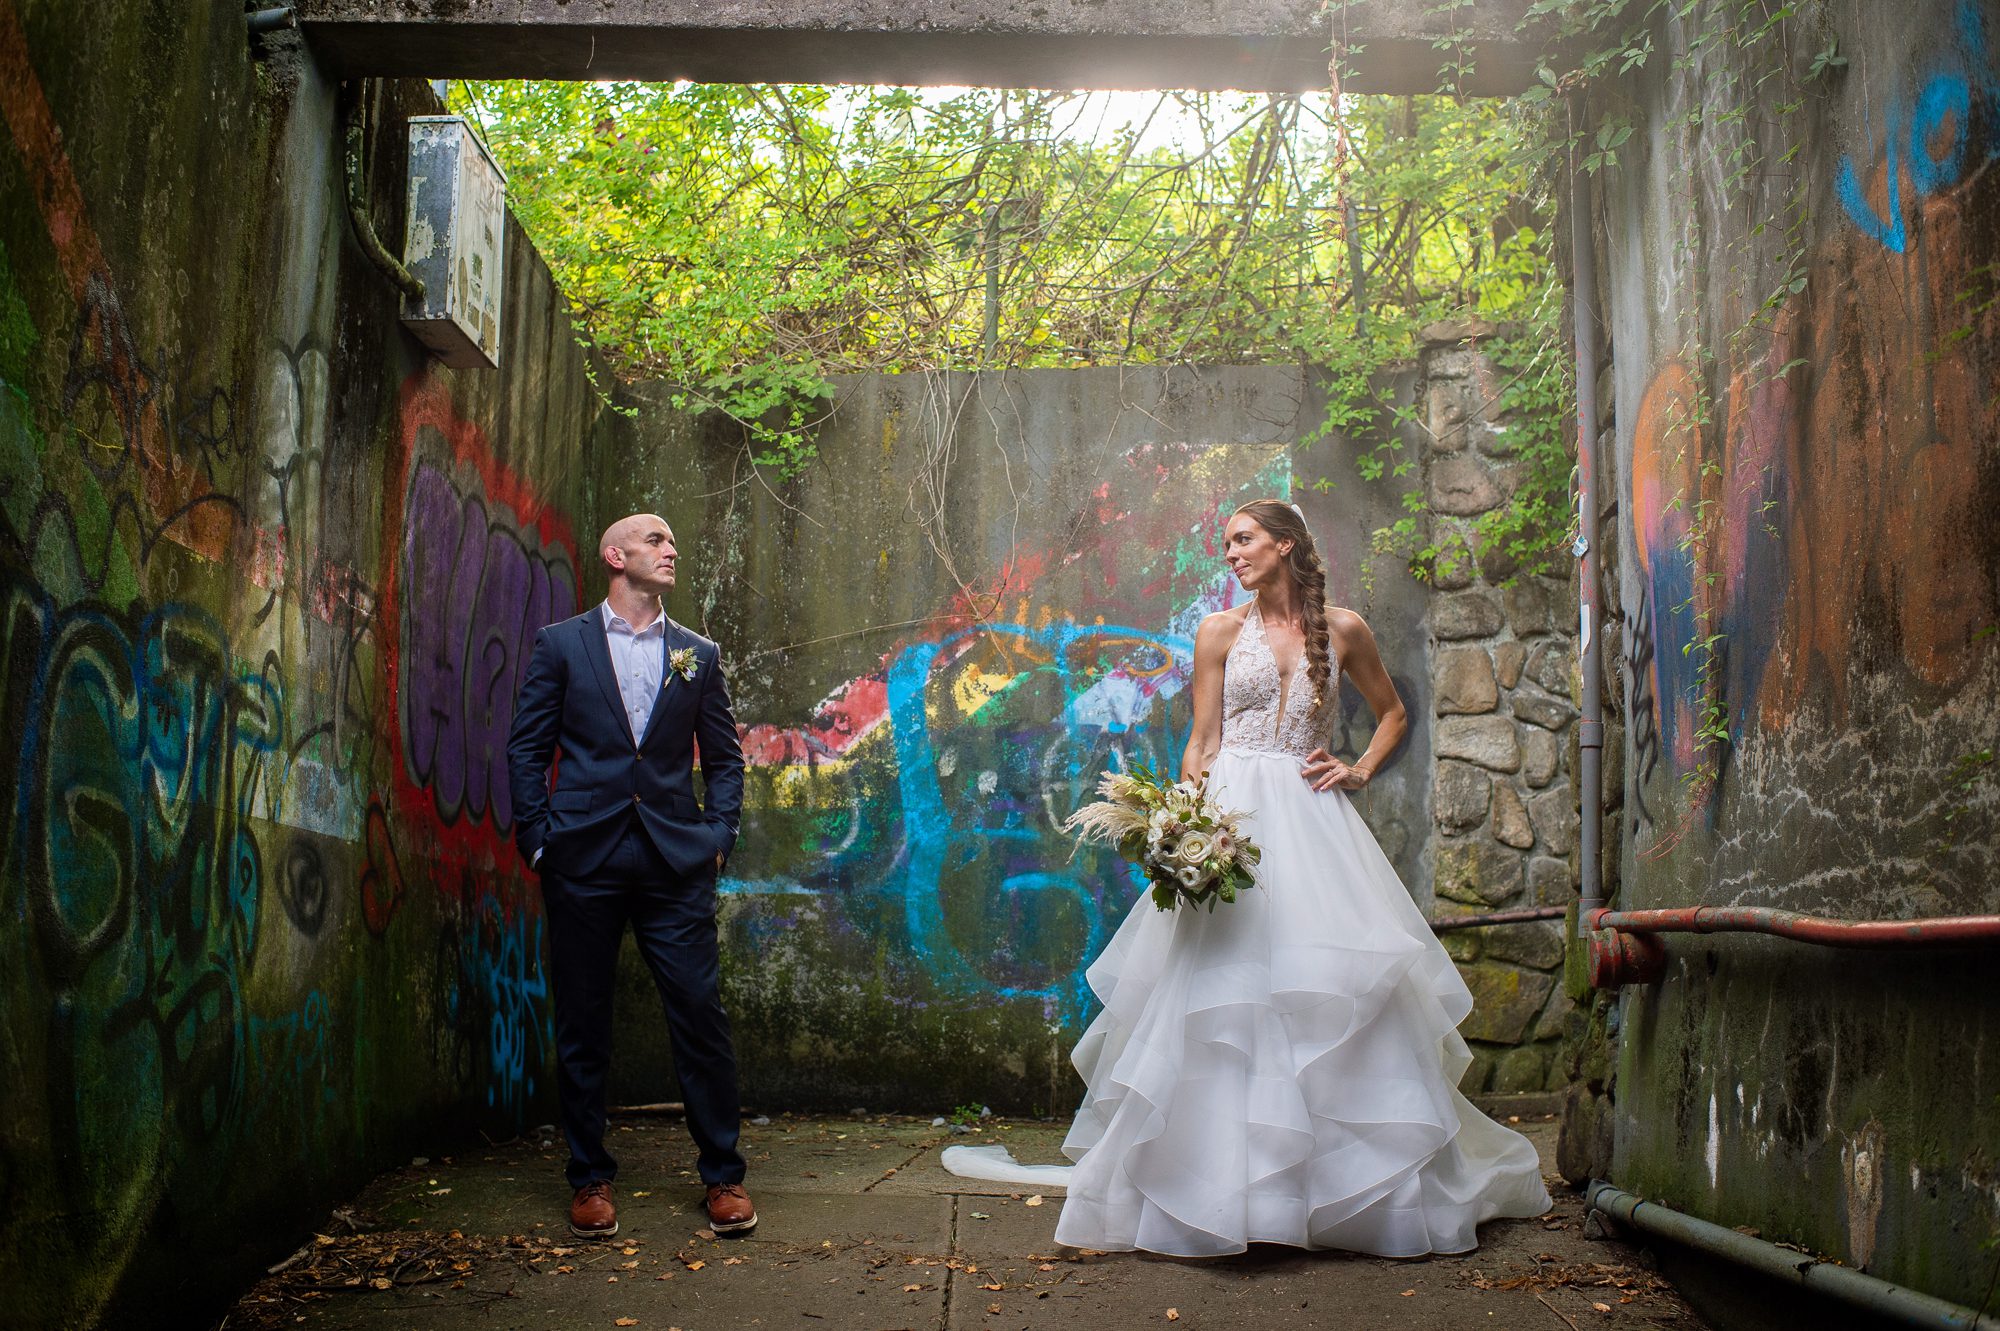 Wedding Photos with Graffiti 